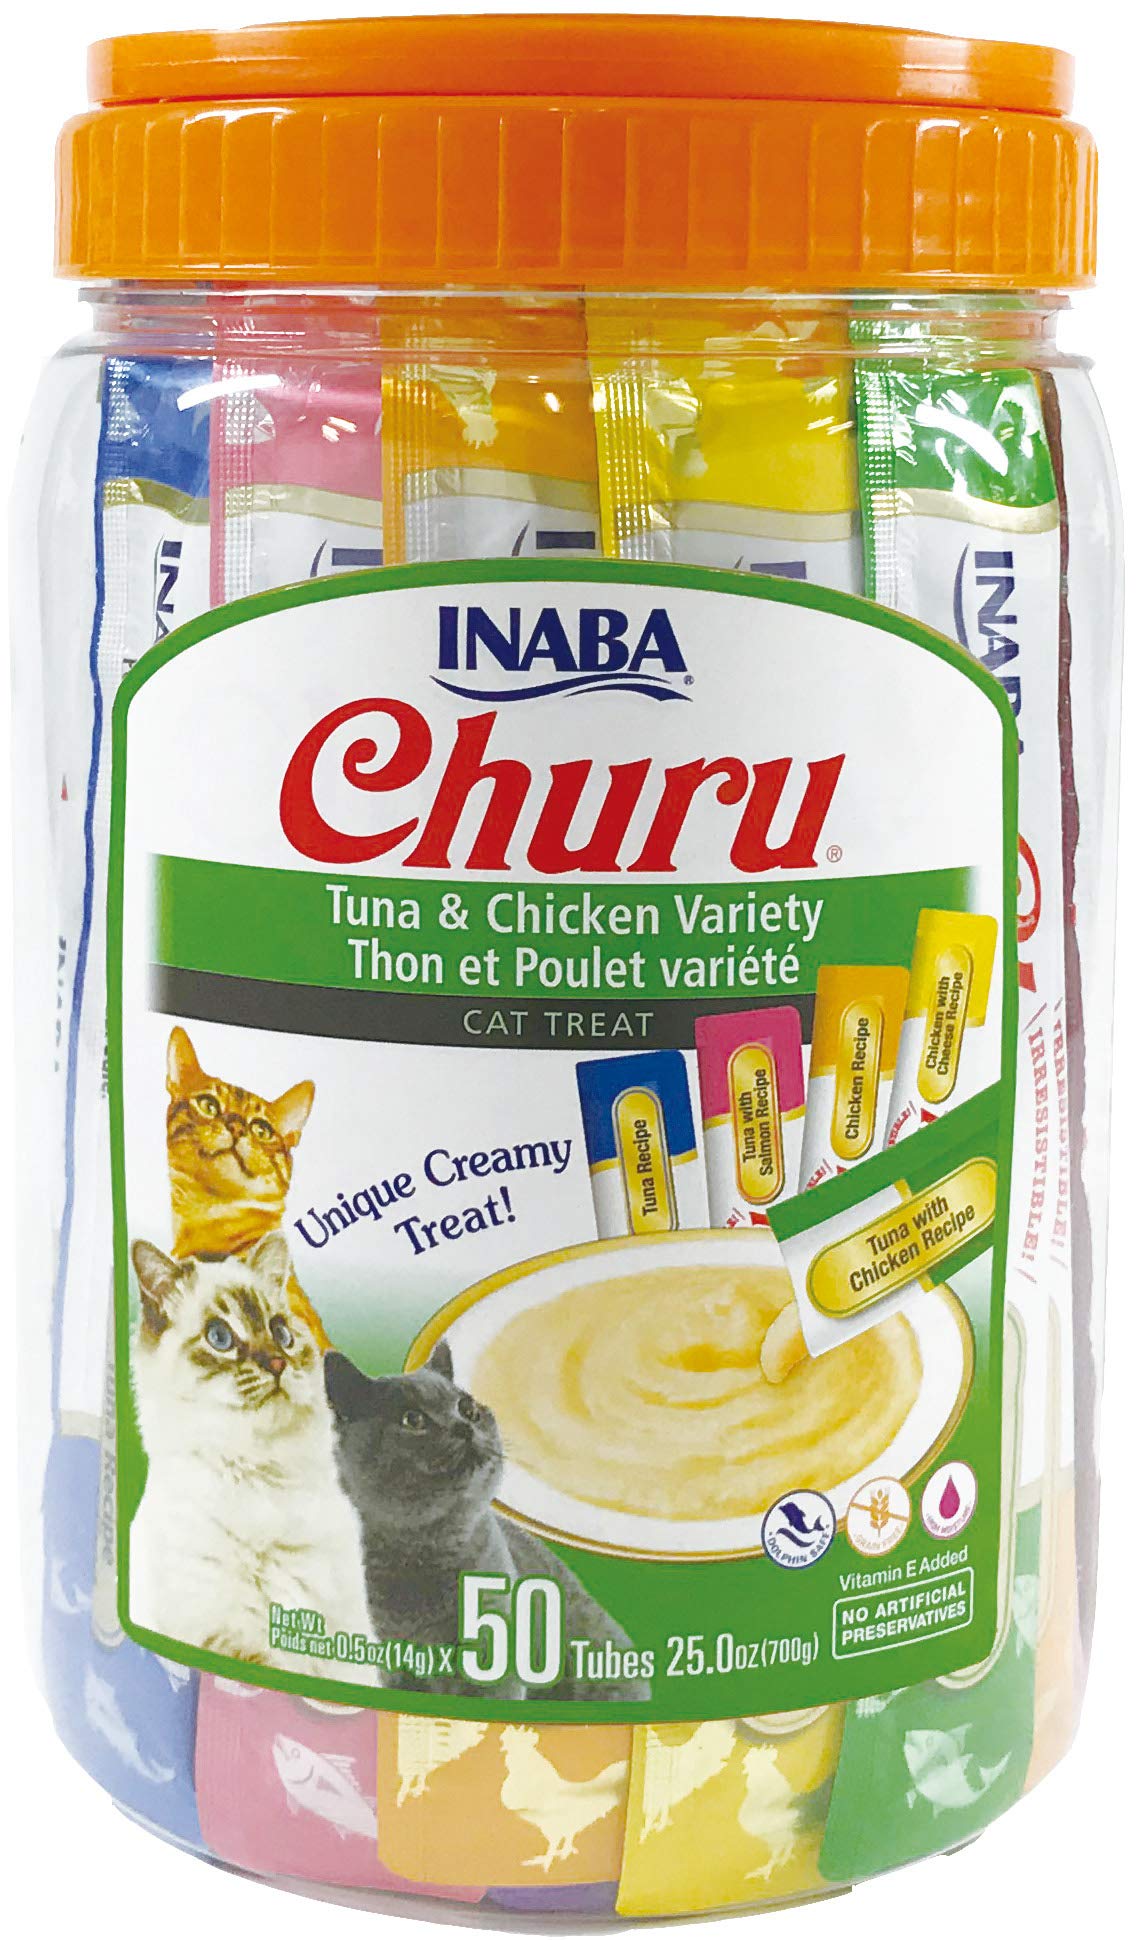 Amazon INABA Churu Cat Treats Squeezable Creamy Purée Cat Treat 50 Tubes, Tuna & Chicken Variety $25.09 S&S After 15% Coupon YMMV